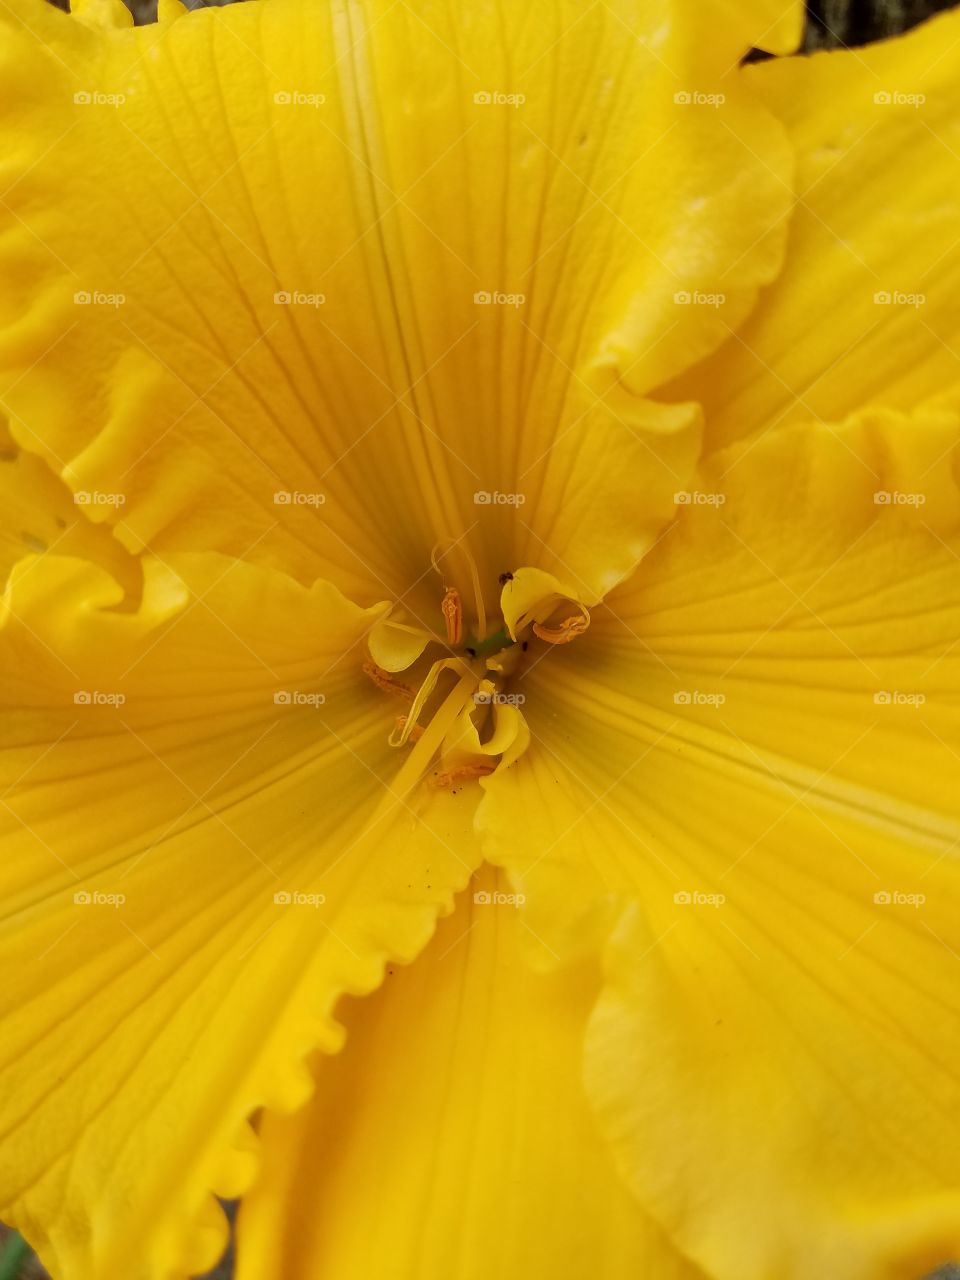 up close flower